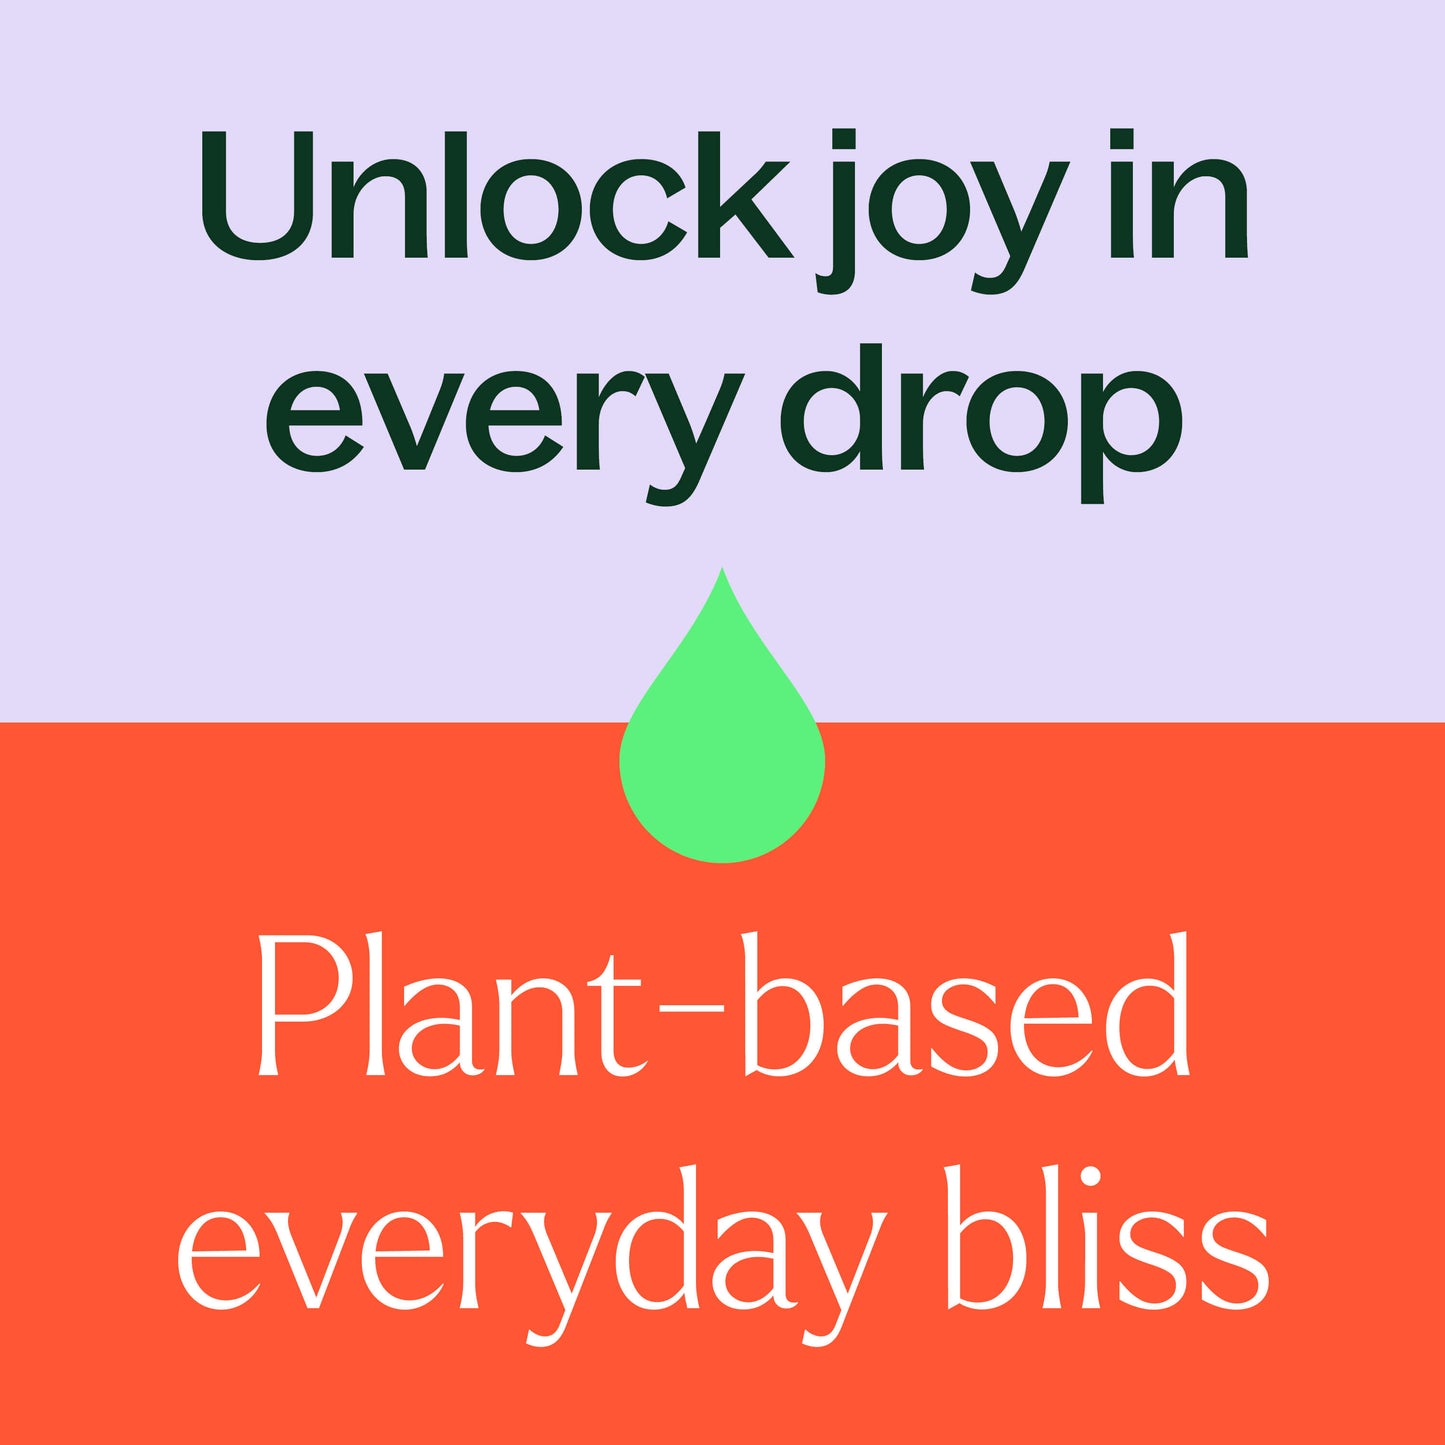 Unlock joy in every drop. Plant based everyday bliss